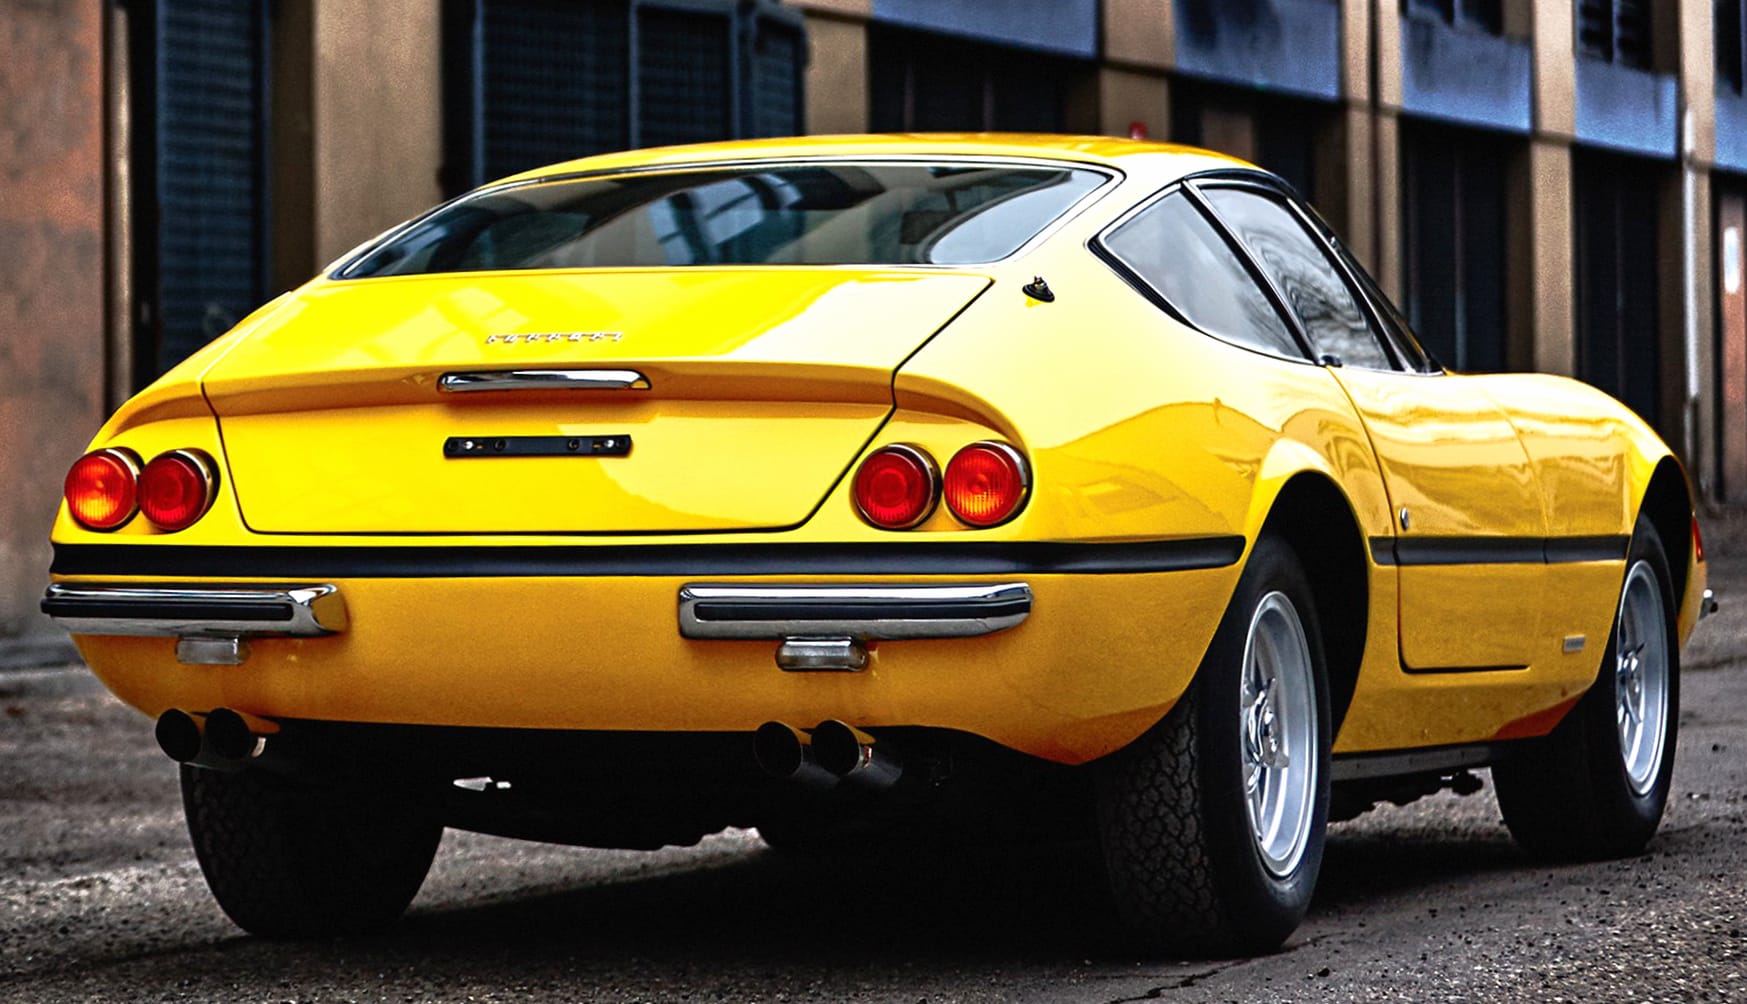 Ferrari 365 GTB 4 Daytona at 320 x 480 iPhone size wallpapers HD quality